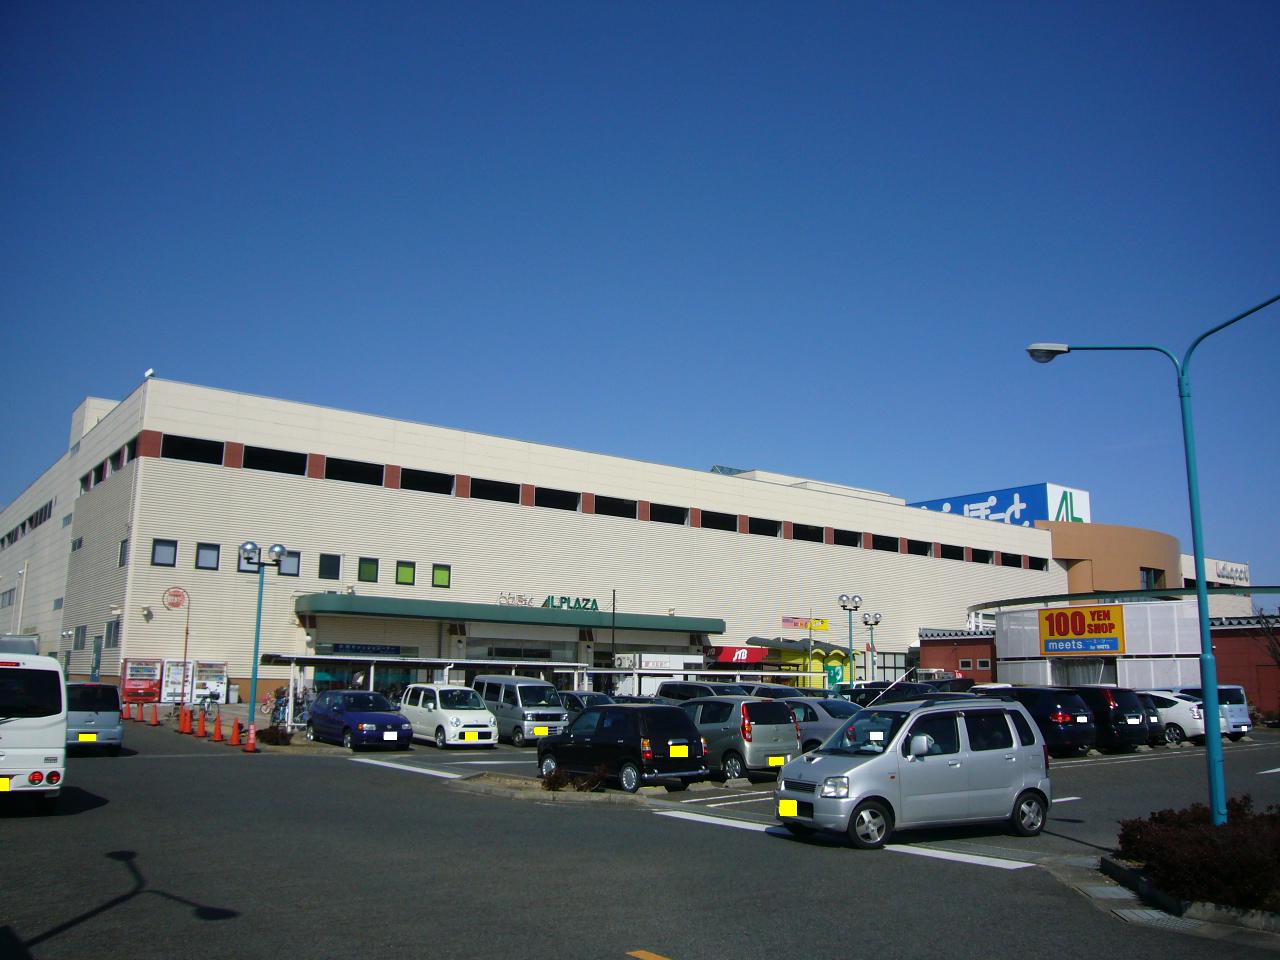 Shopping centre. LaLaport Moriyama until the (shopping center) 1352m